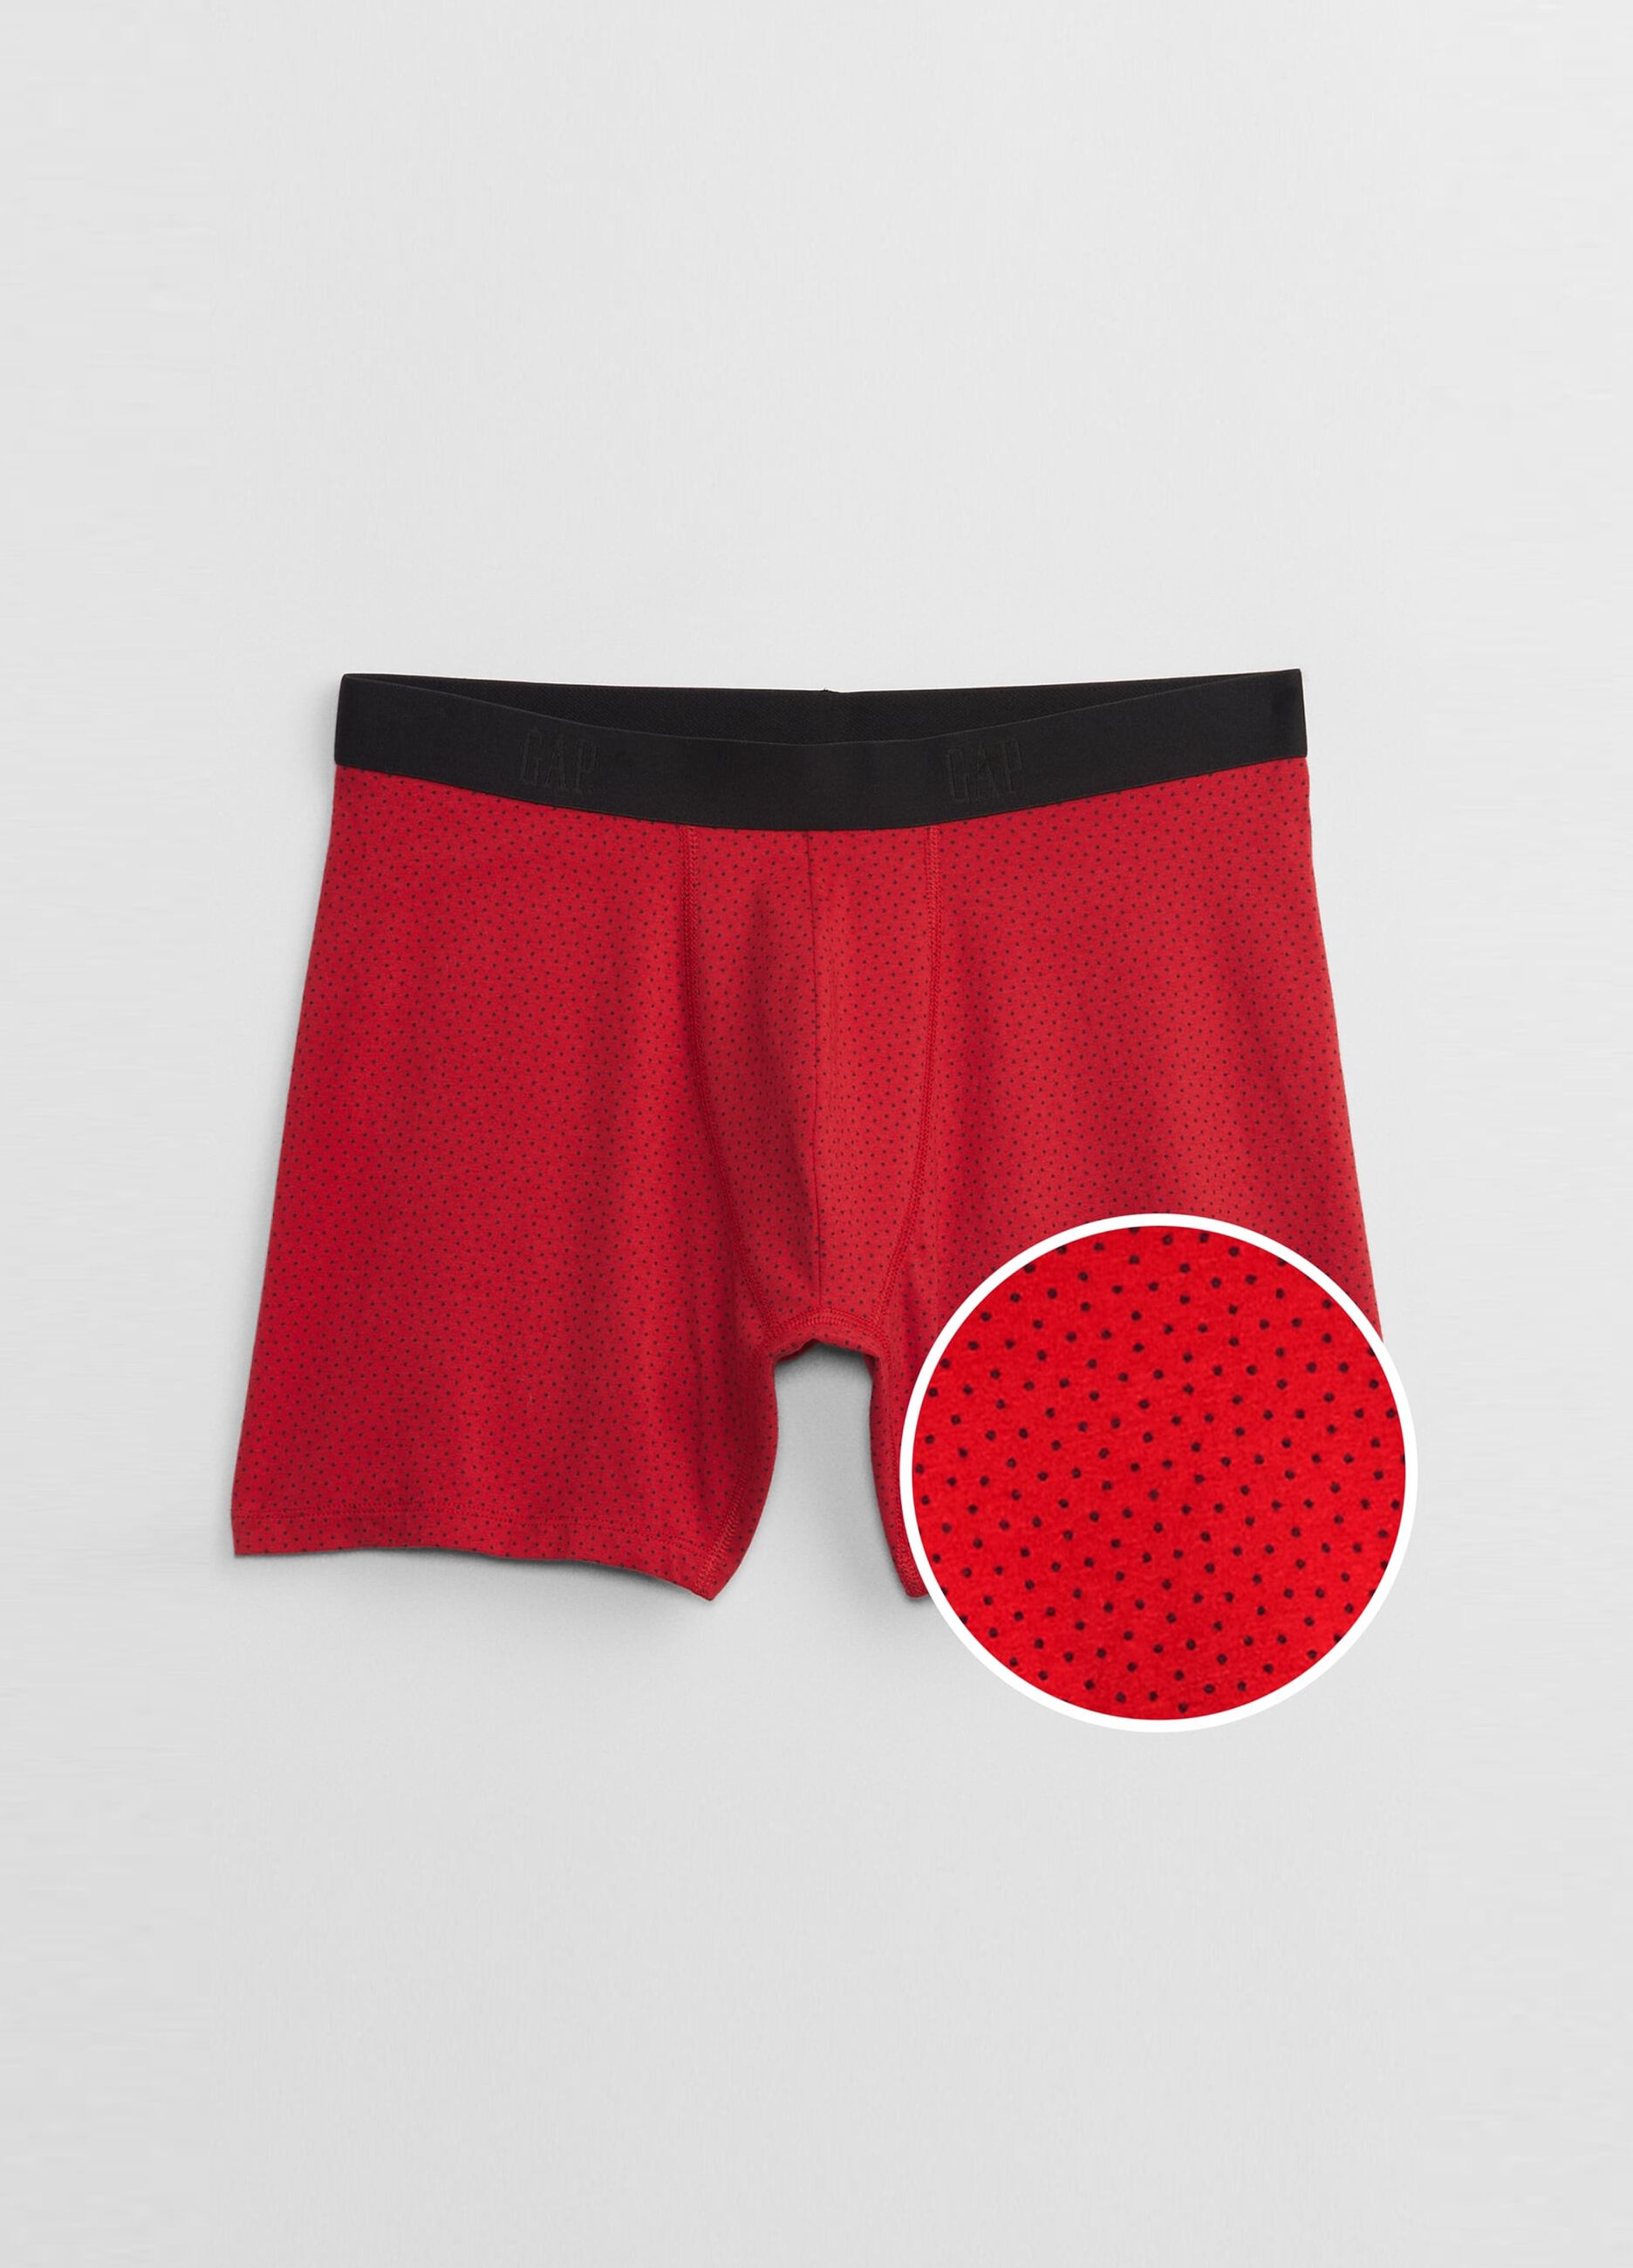 Boxer shorts with micro polka dot pattern